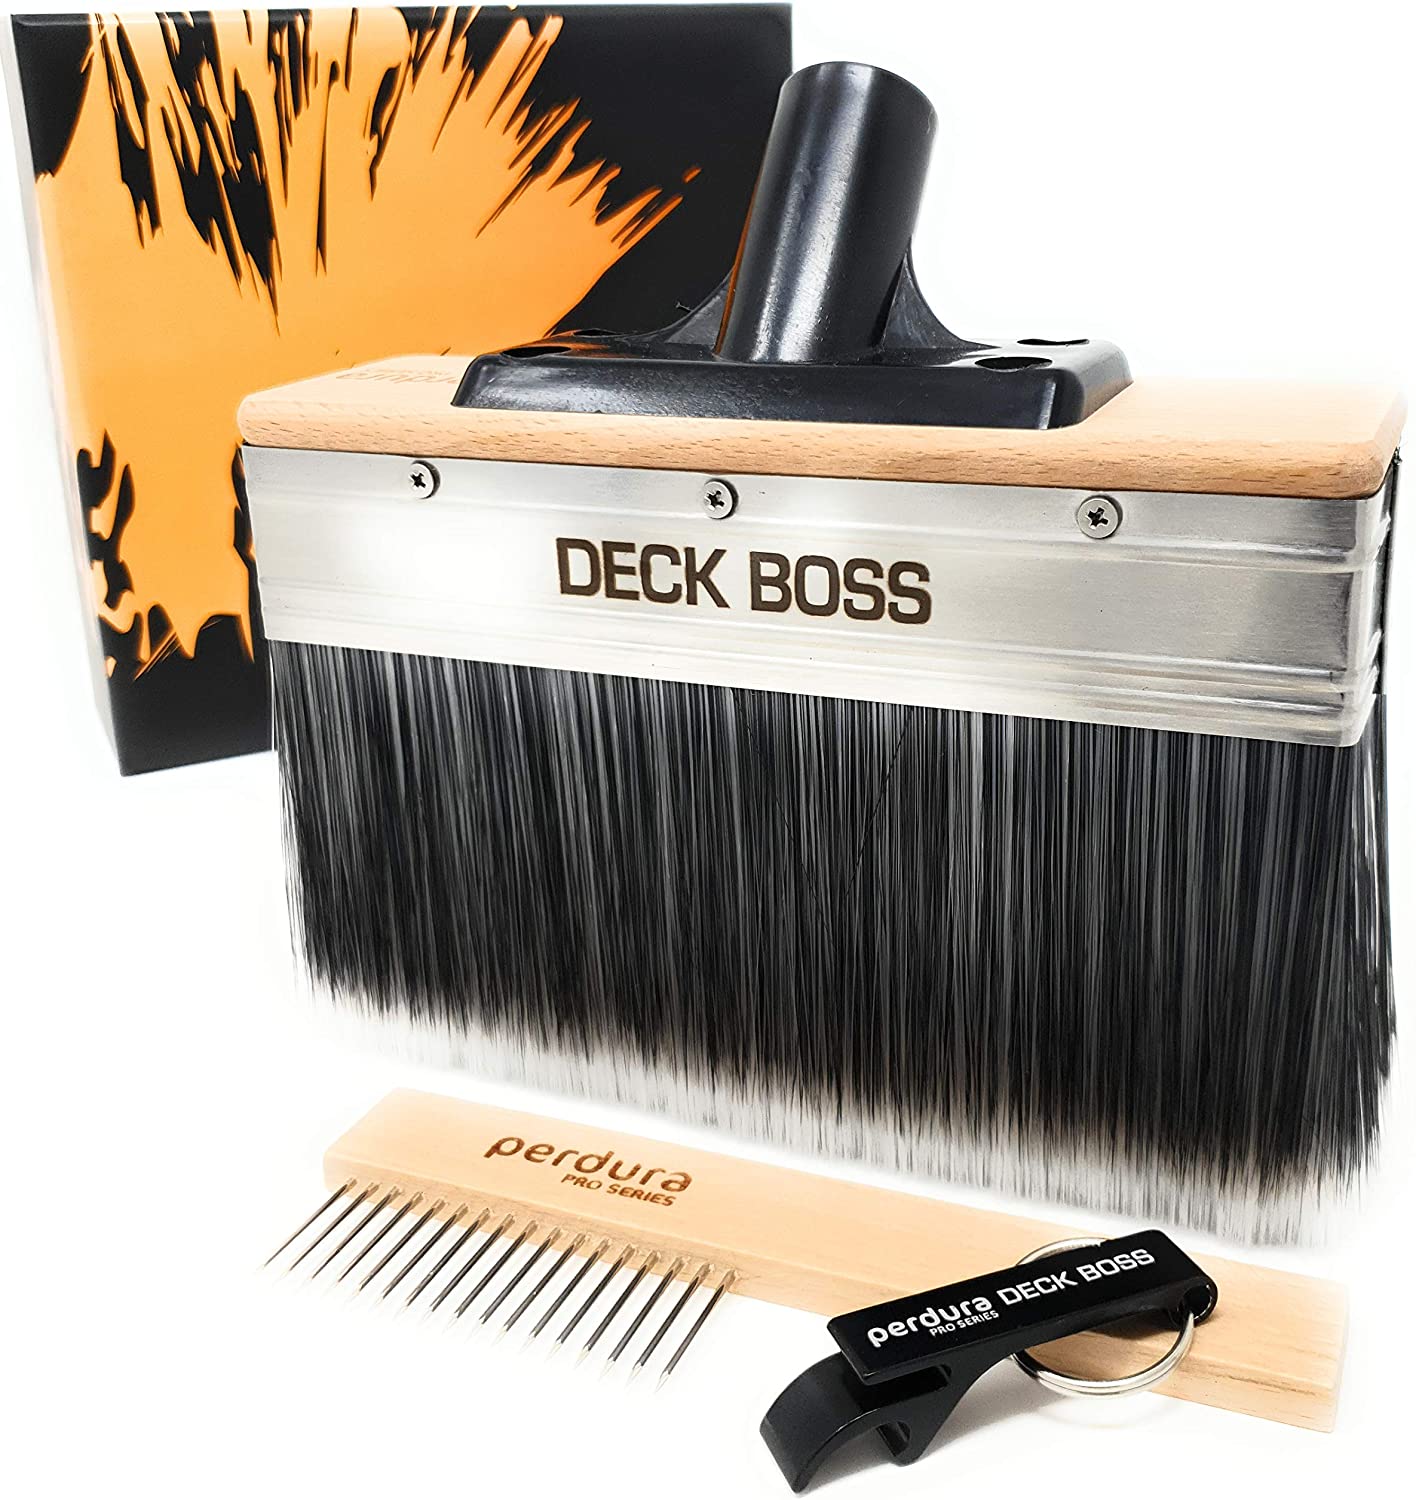 Deck Stain Brush Applicator - Deck BOSS by Perdura